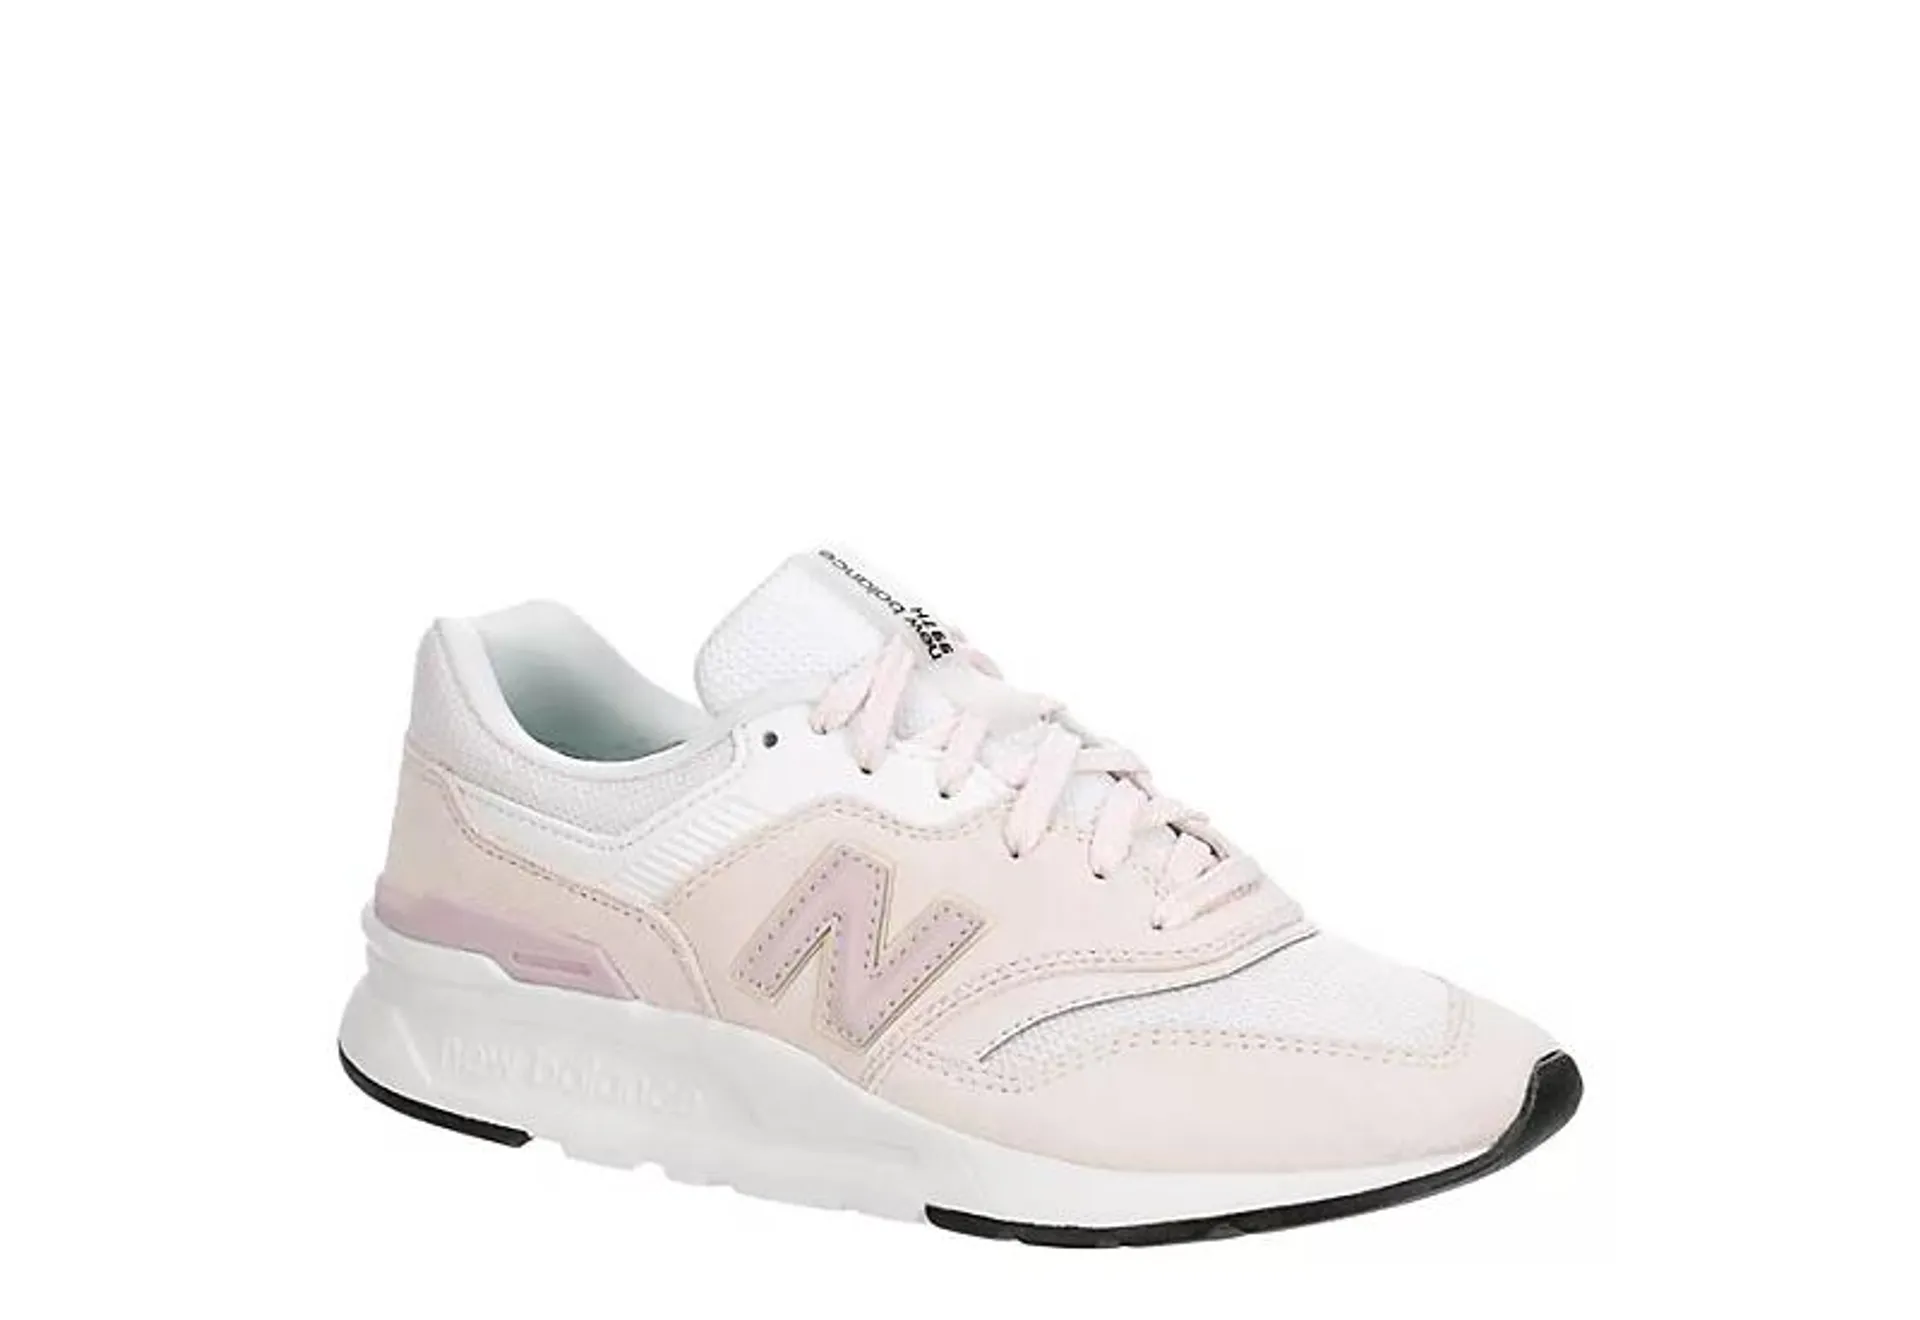 New Balance Womens 997 Sneaker - Pale Pink